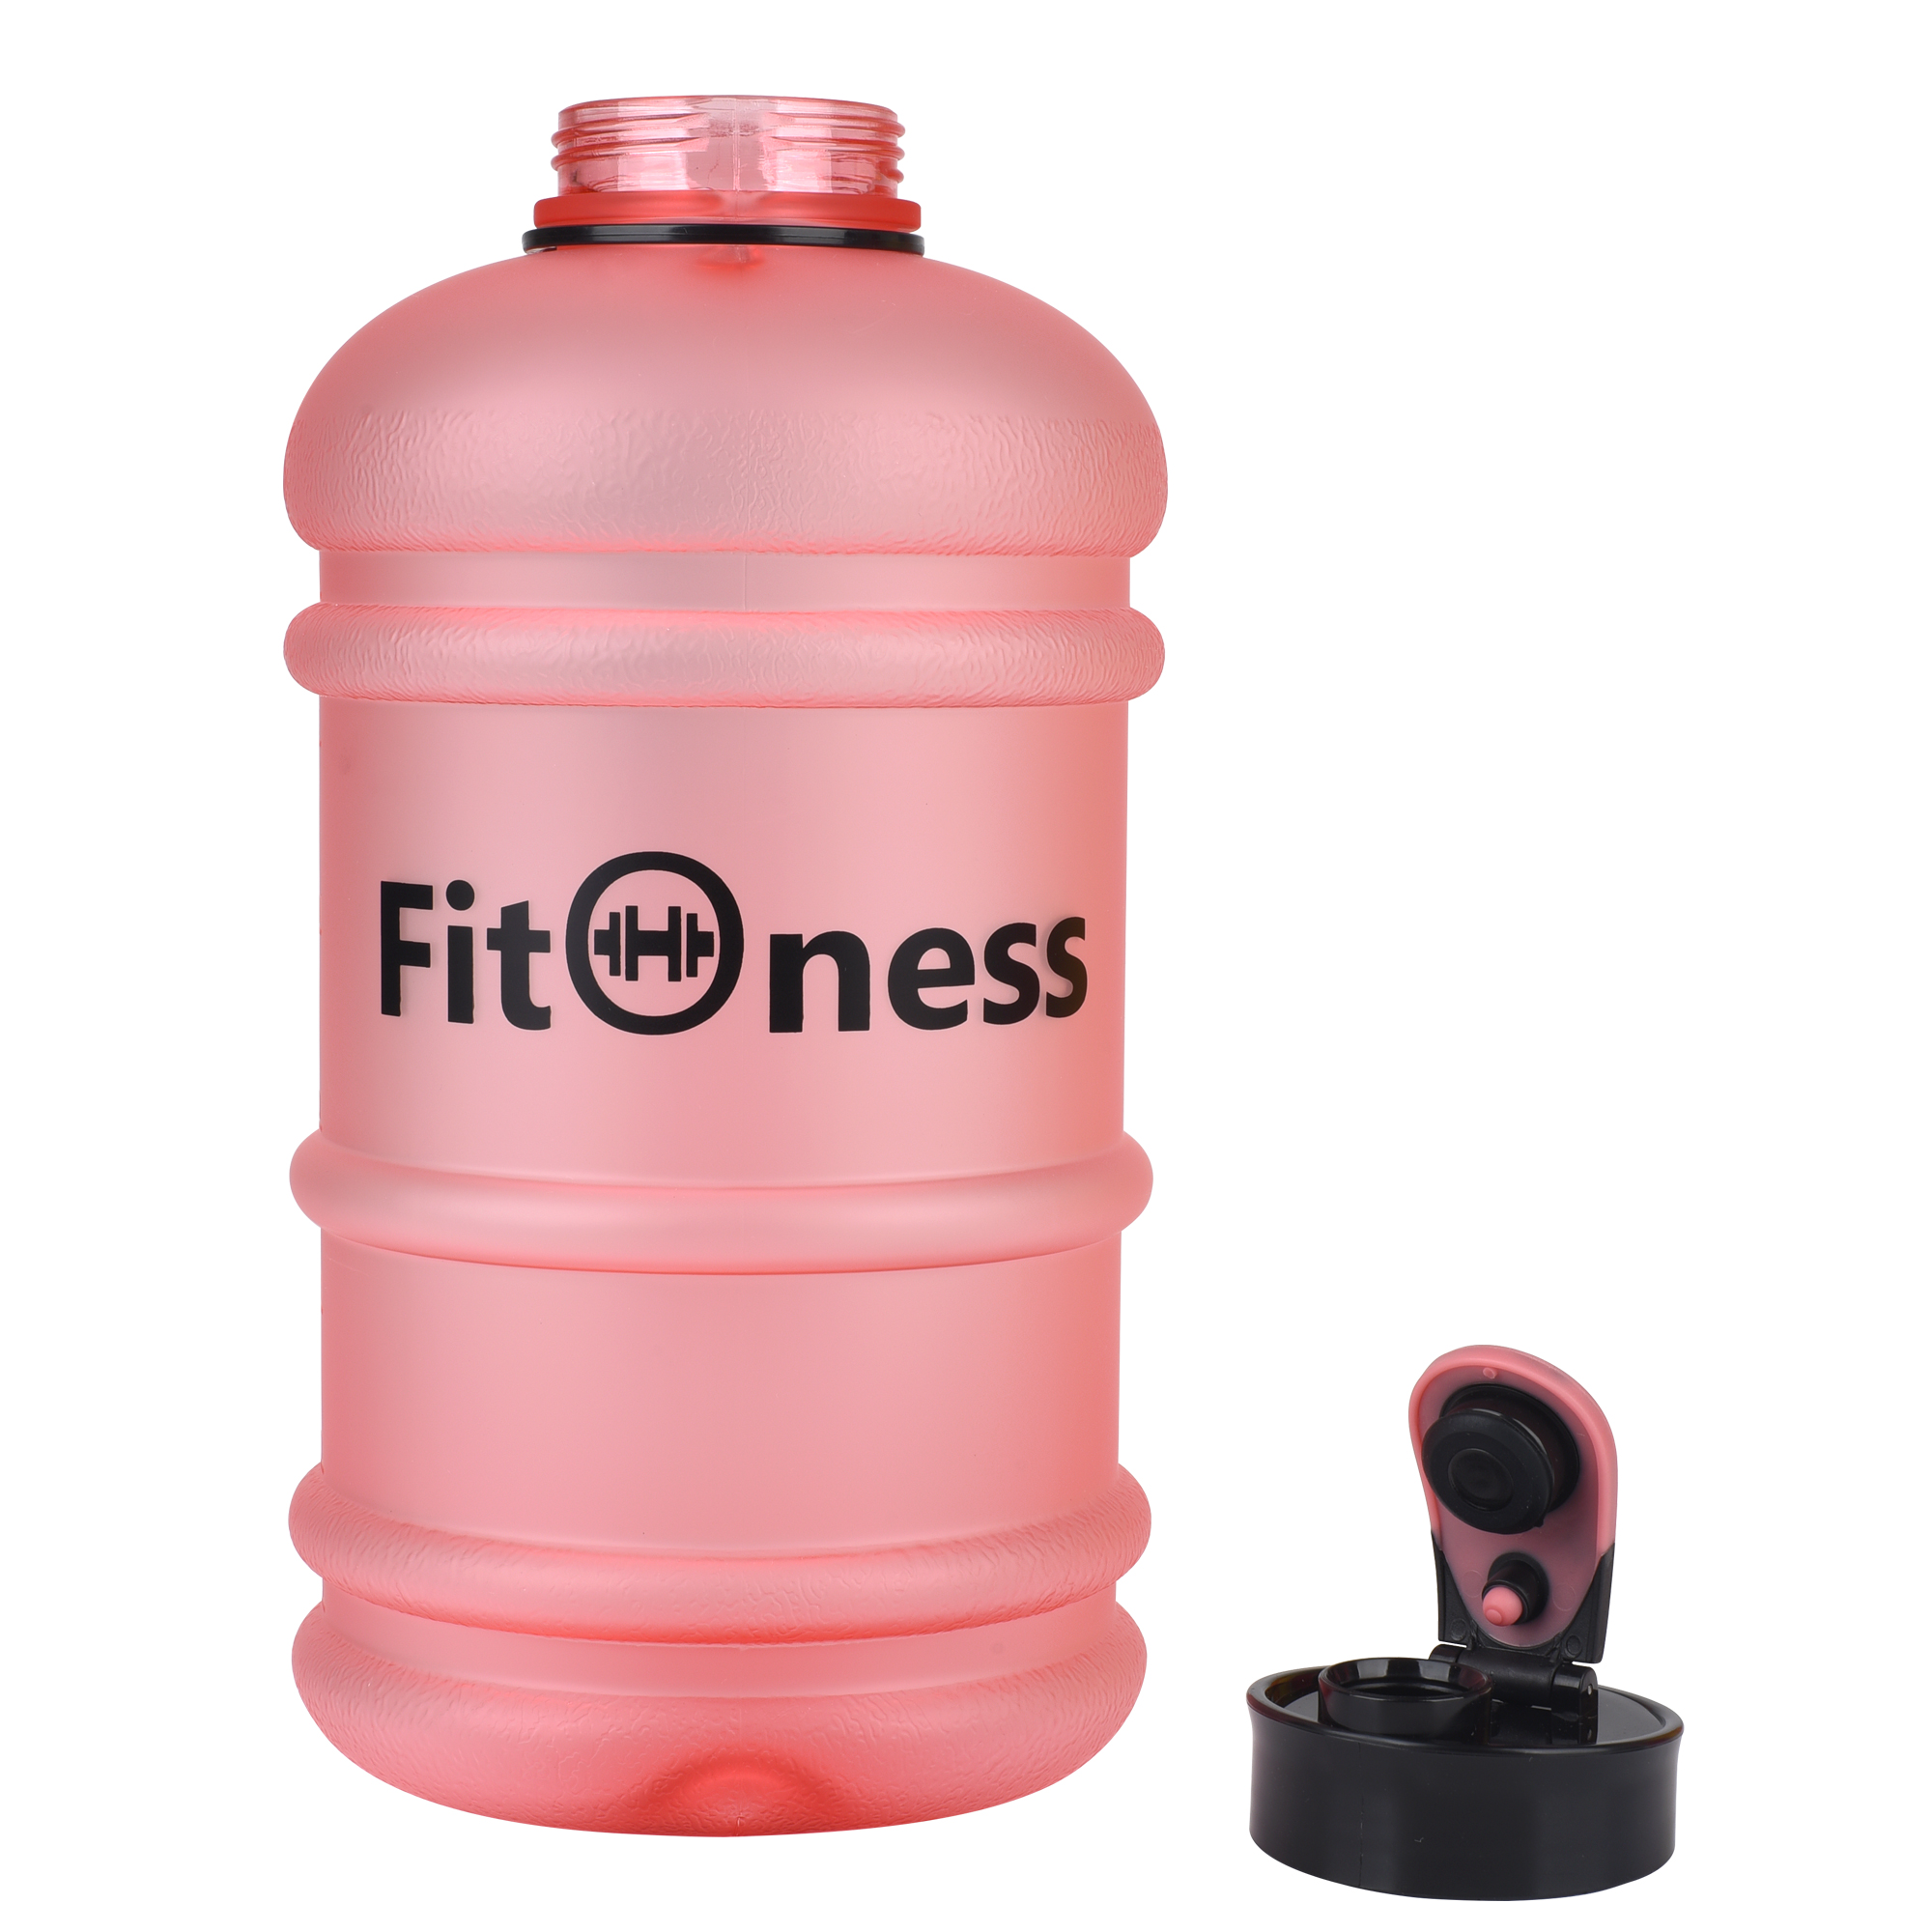 Brand Fitness Jug Bottle 2.2l / 77oz Pink Sports